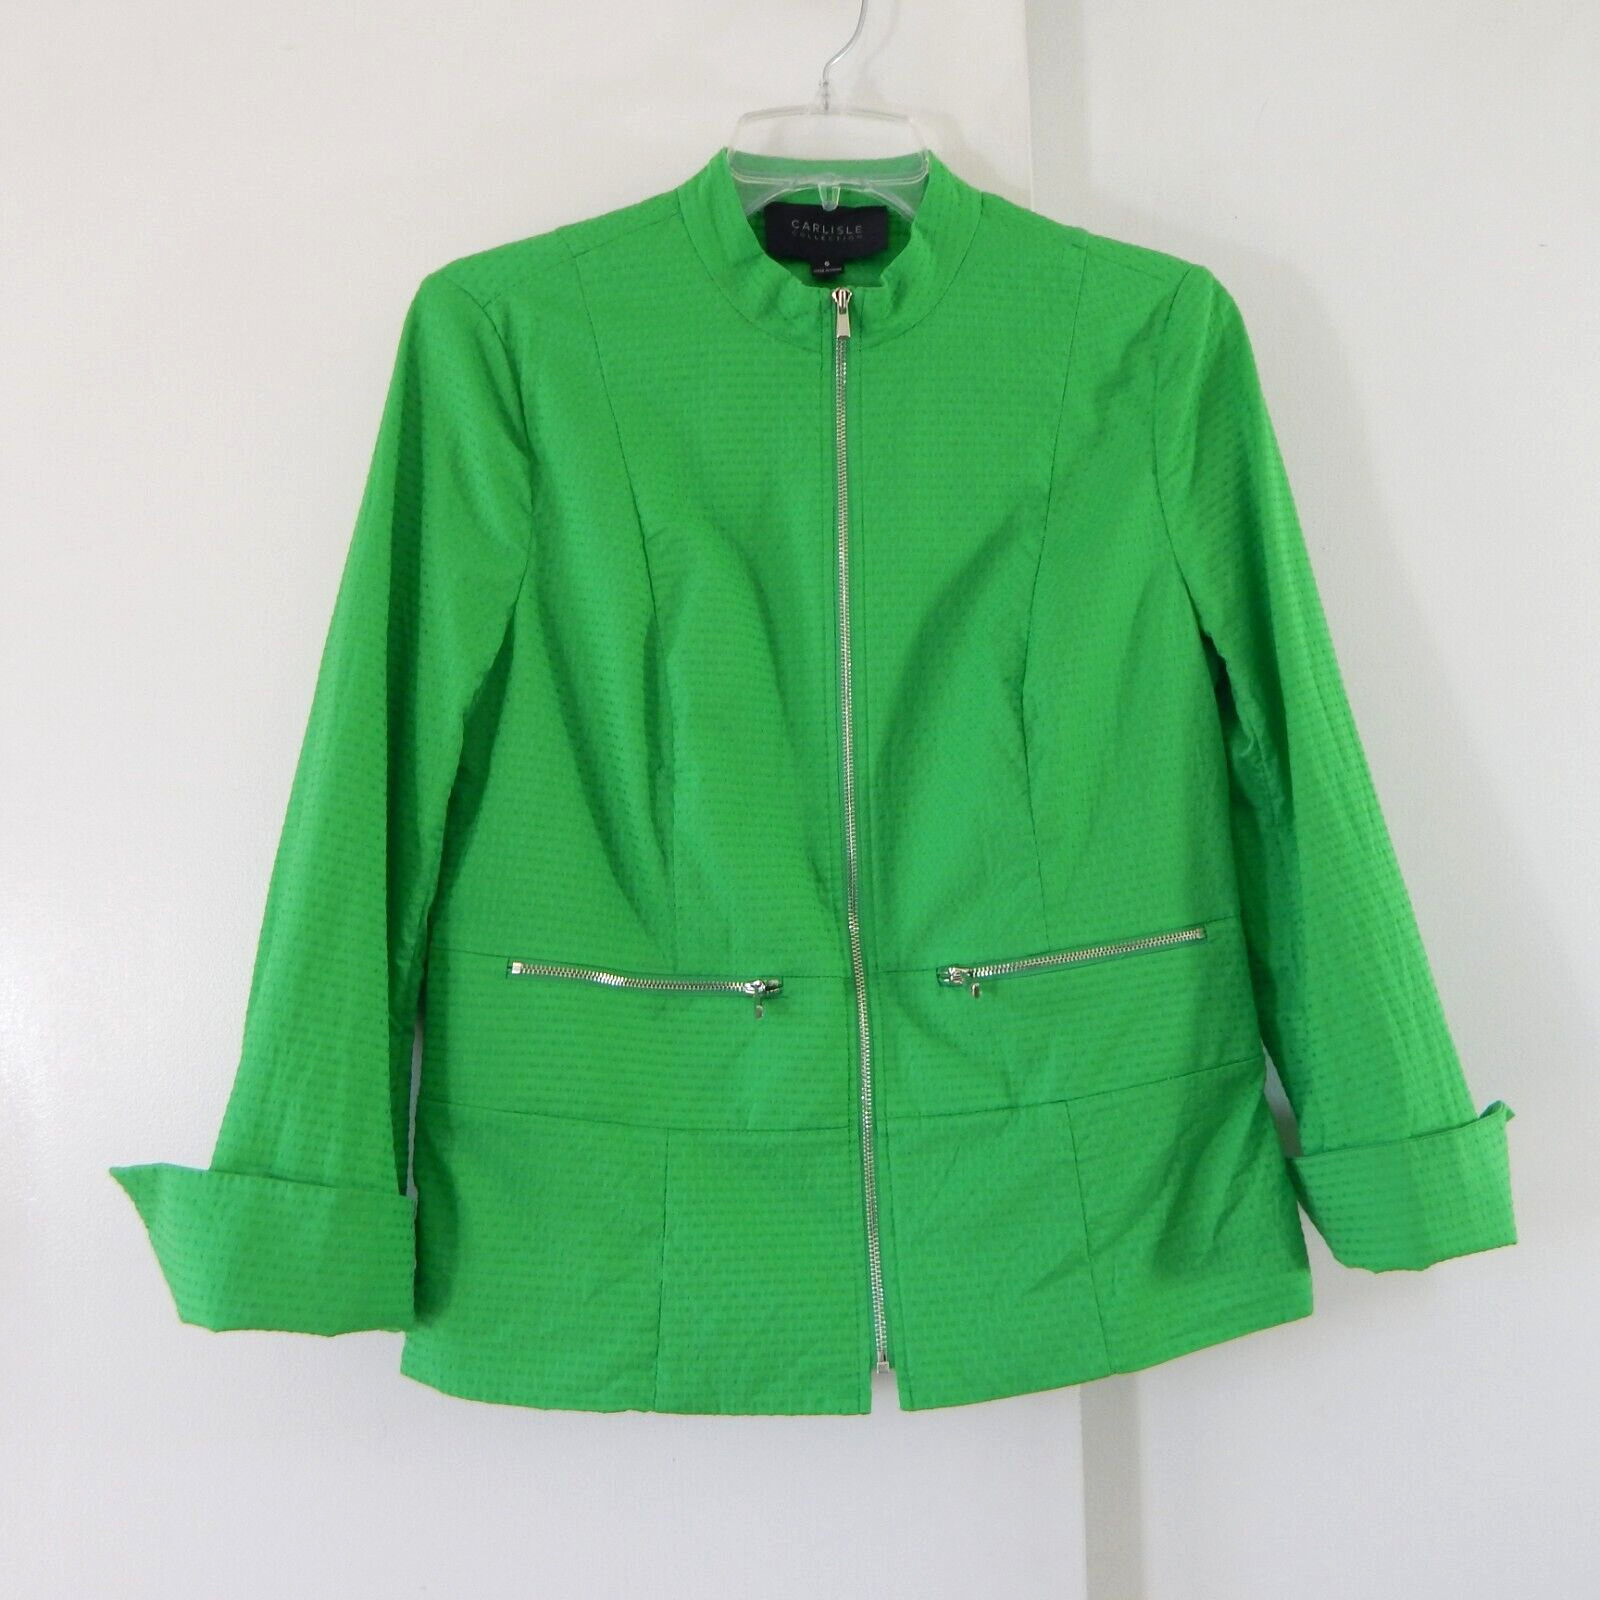 CARLISLE COLLECTION jacket blazer zip up 100% cotton 3/4 sleeve casual green 6